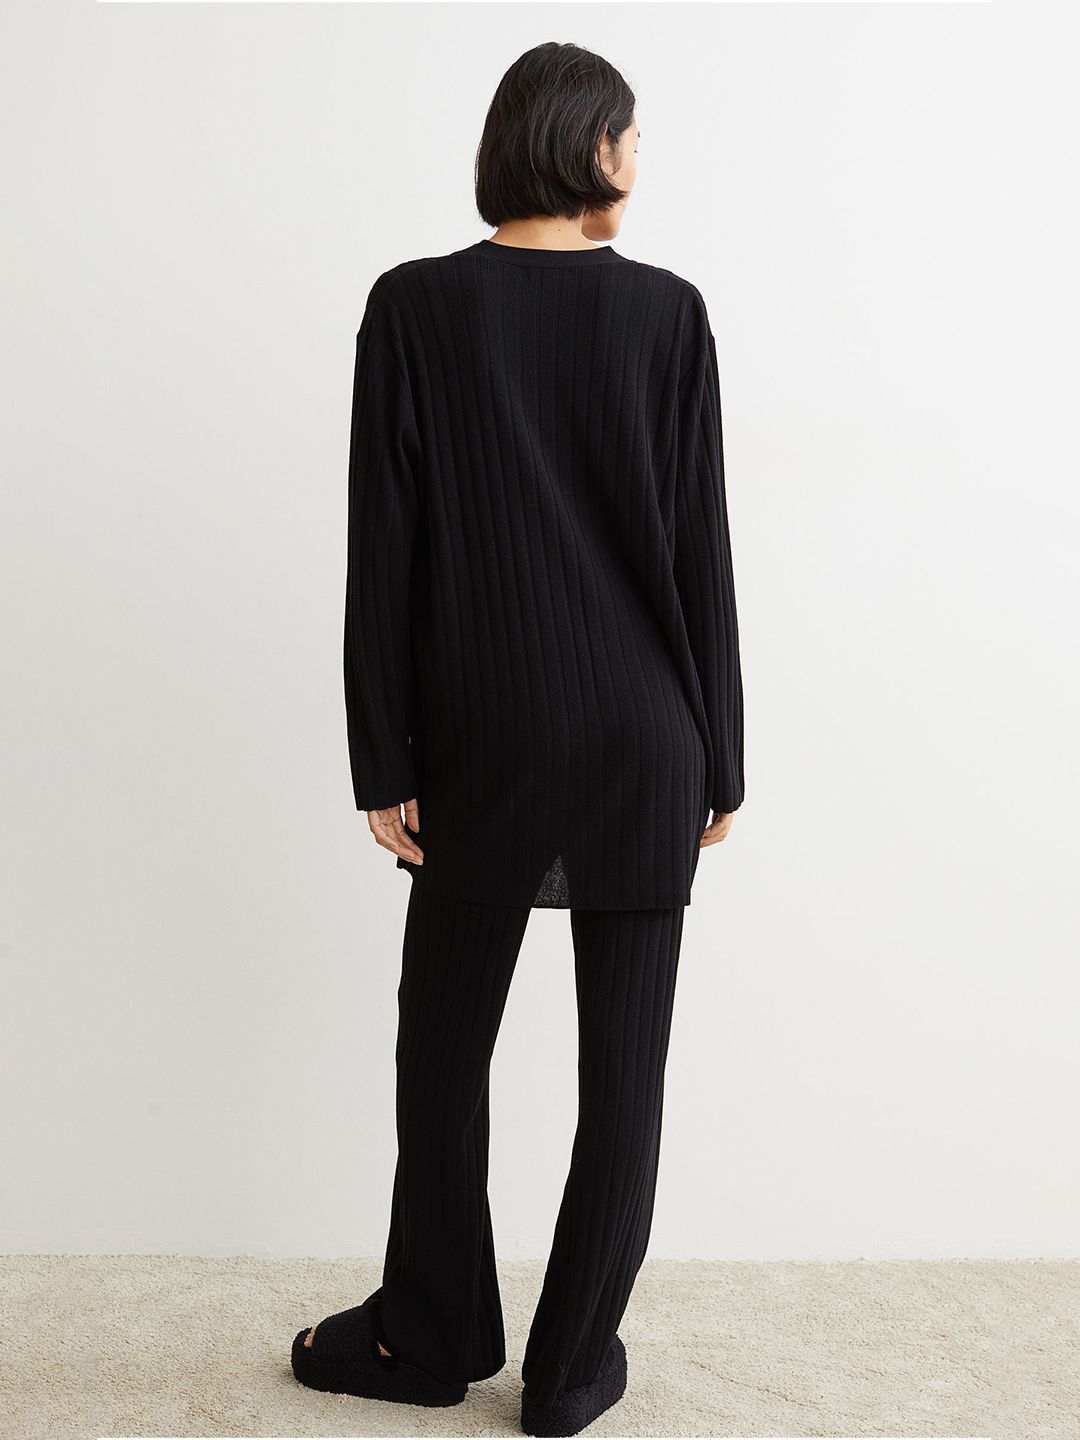 H&M Women Black Solid Long Cardigan Price in India